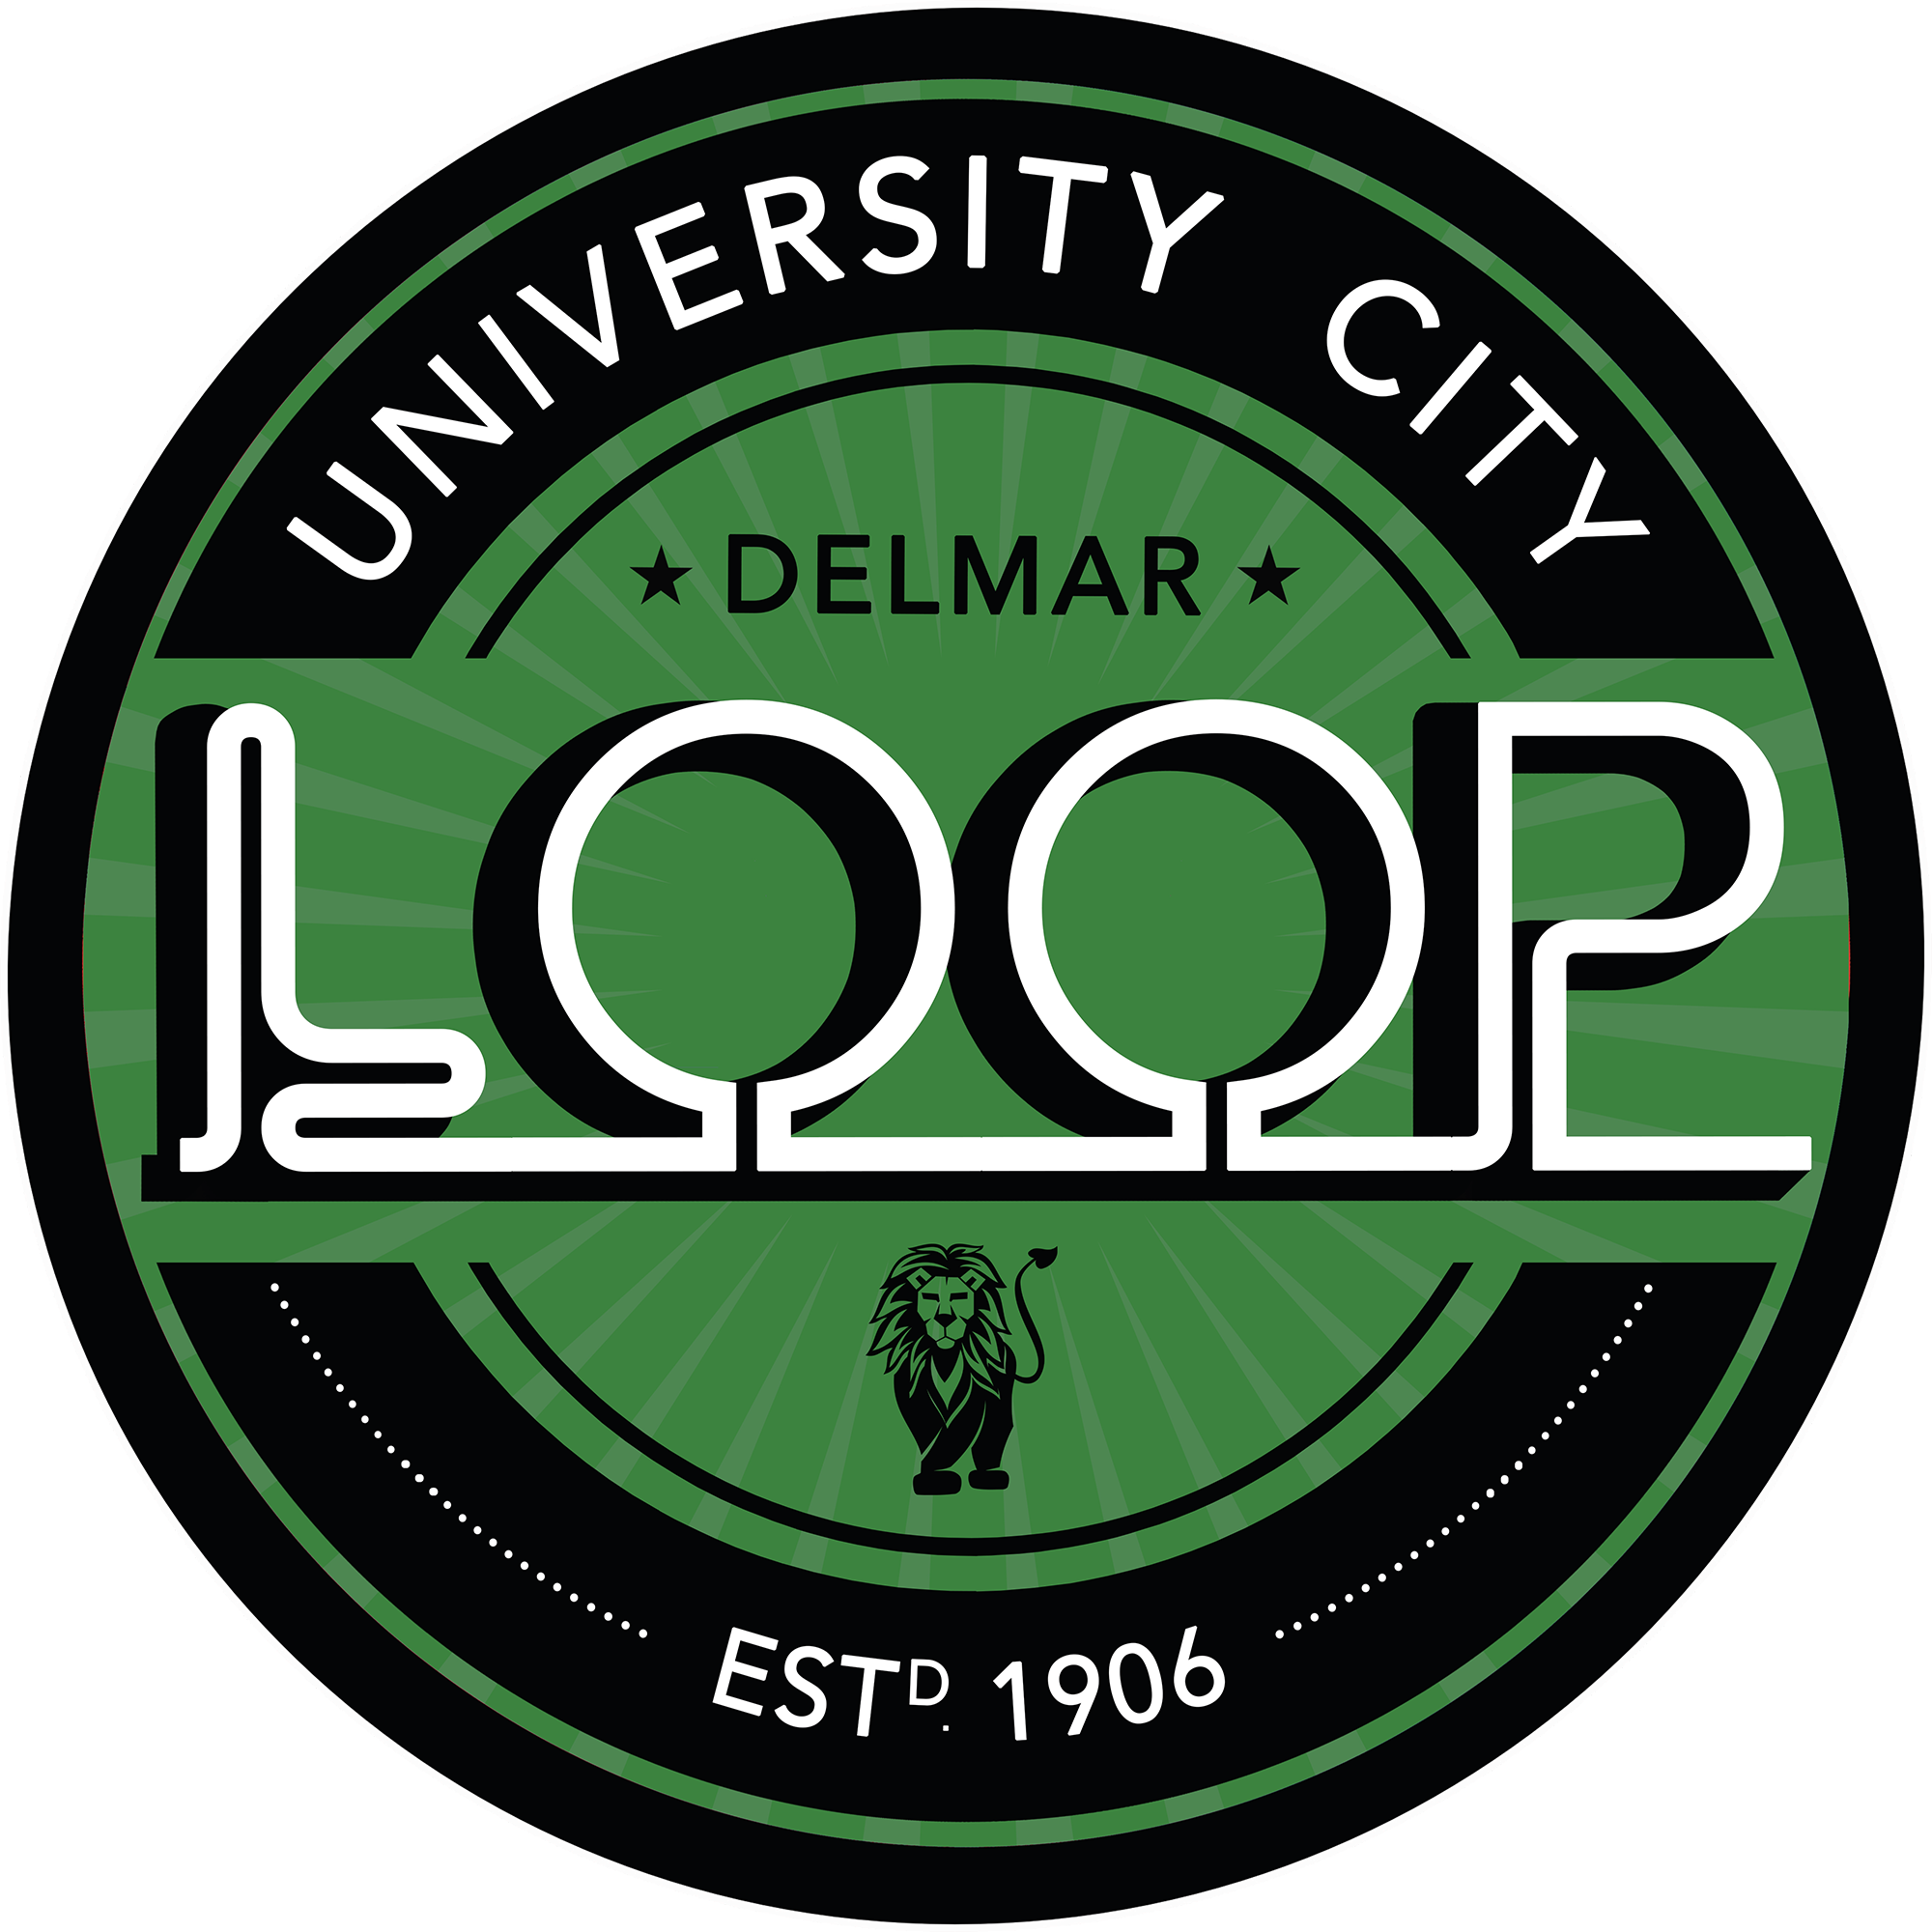 University City Loop